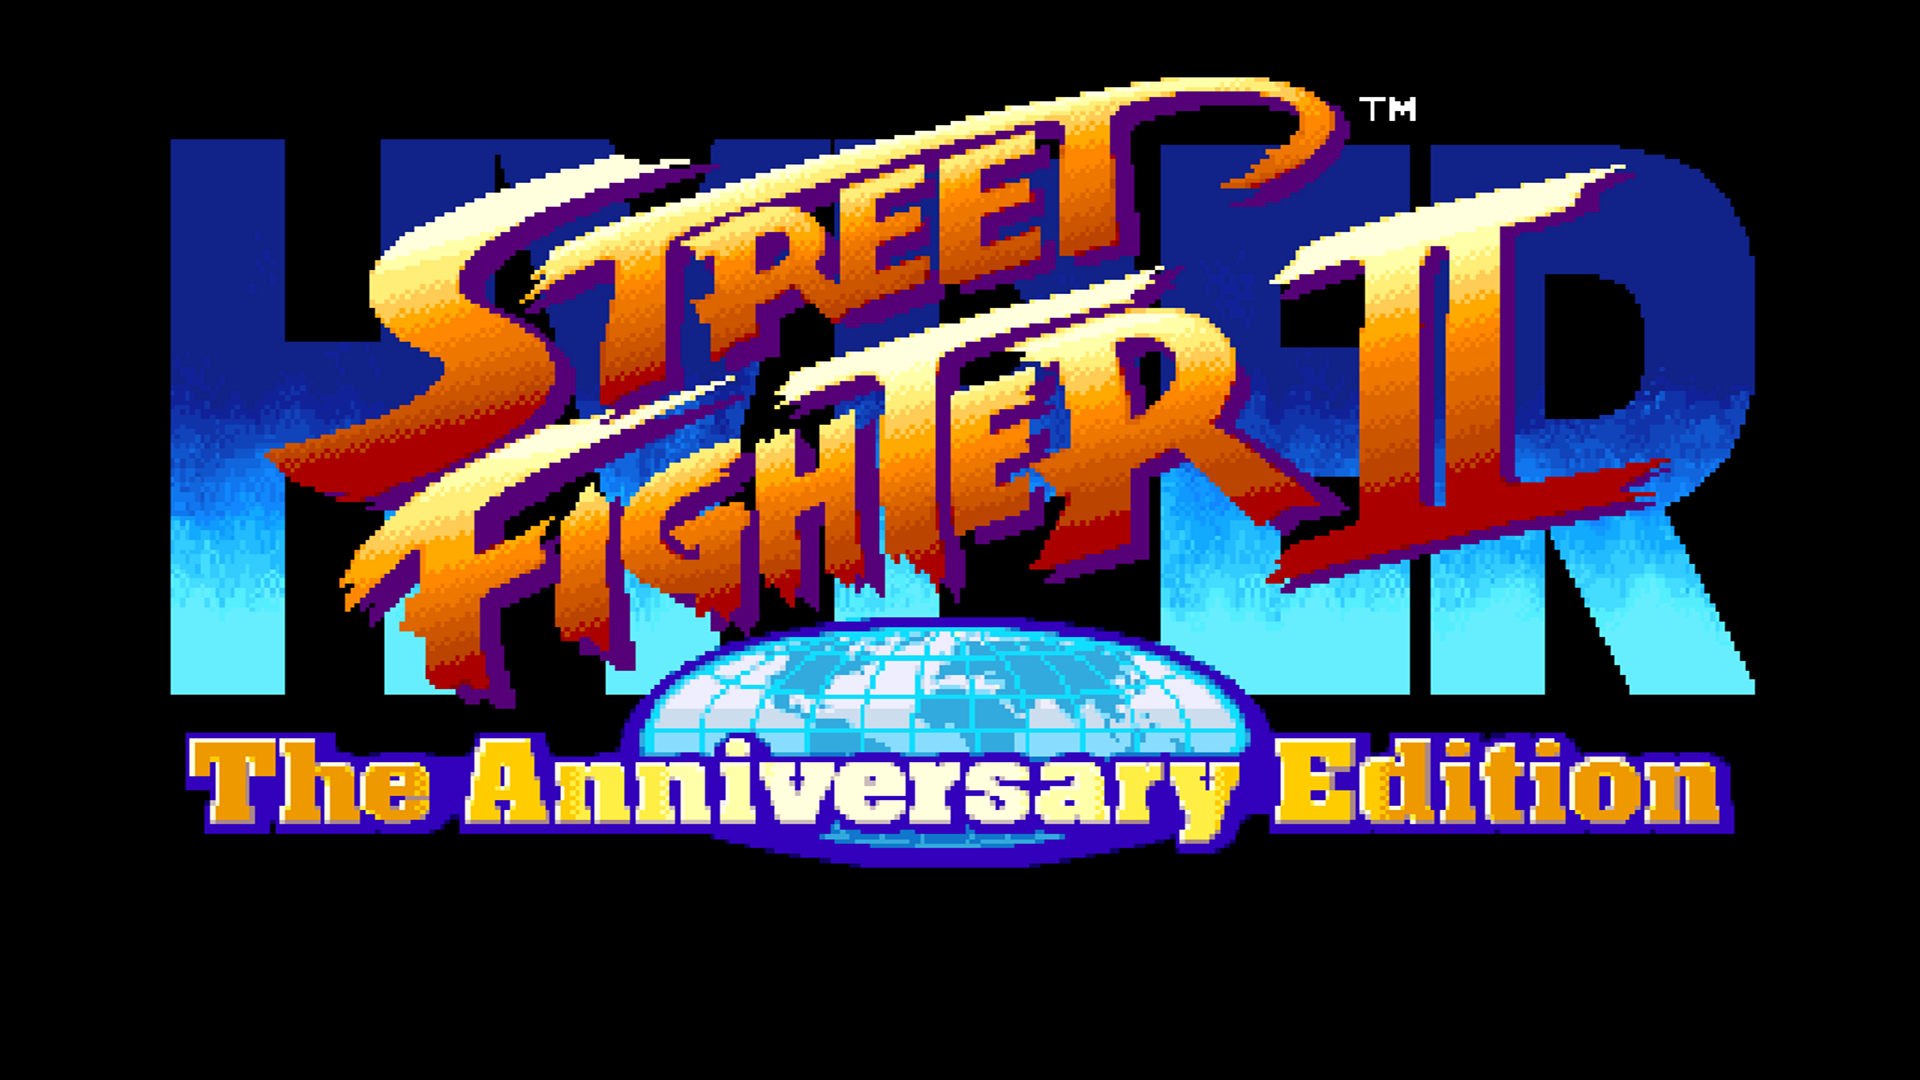 Hyper Street Fighter II: The Anniversary Edition Logo